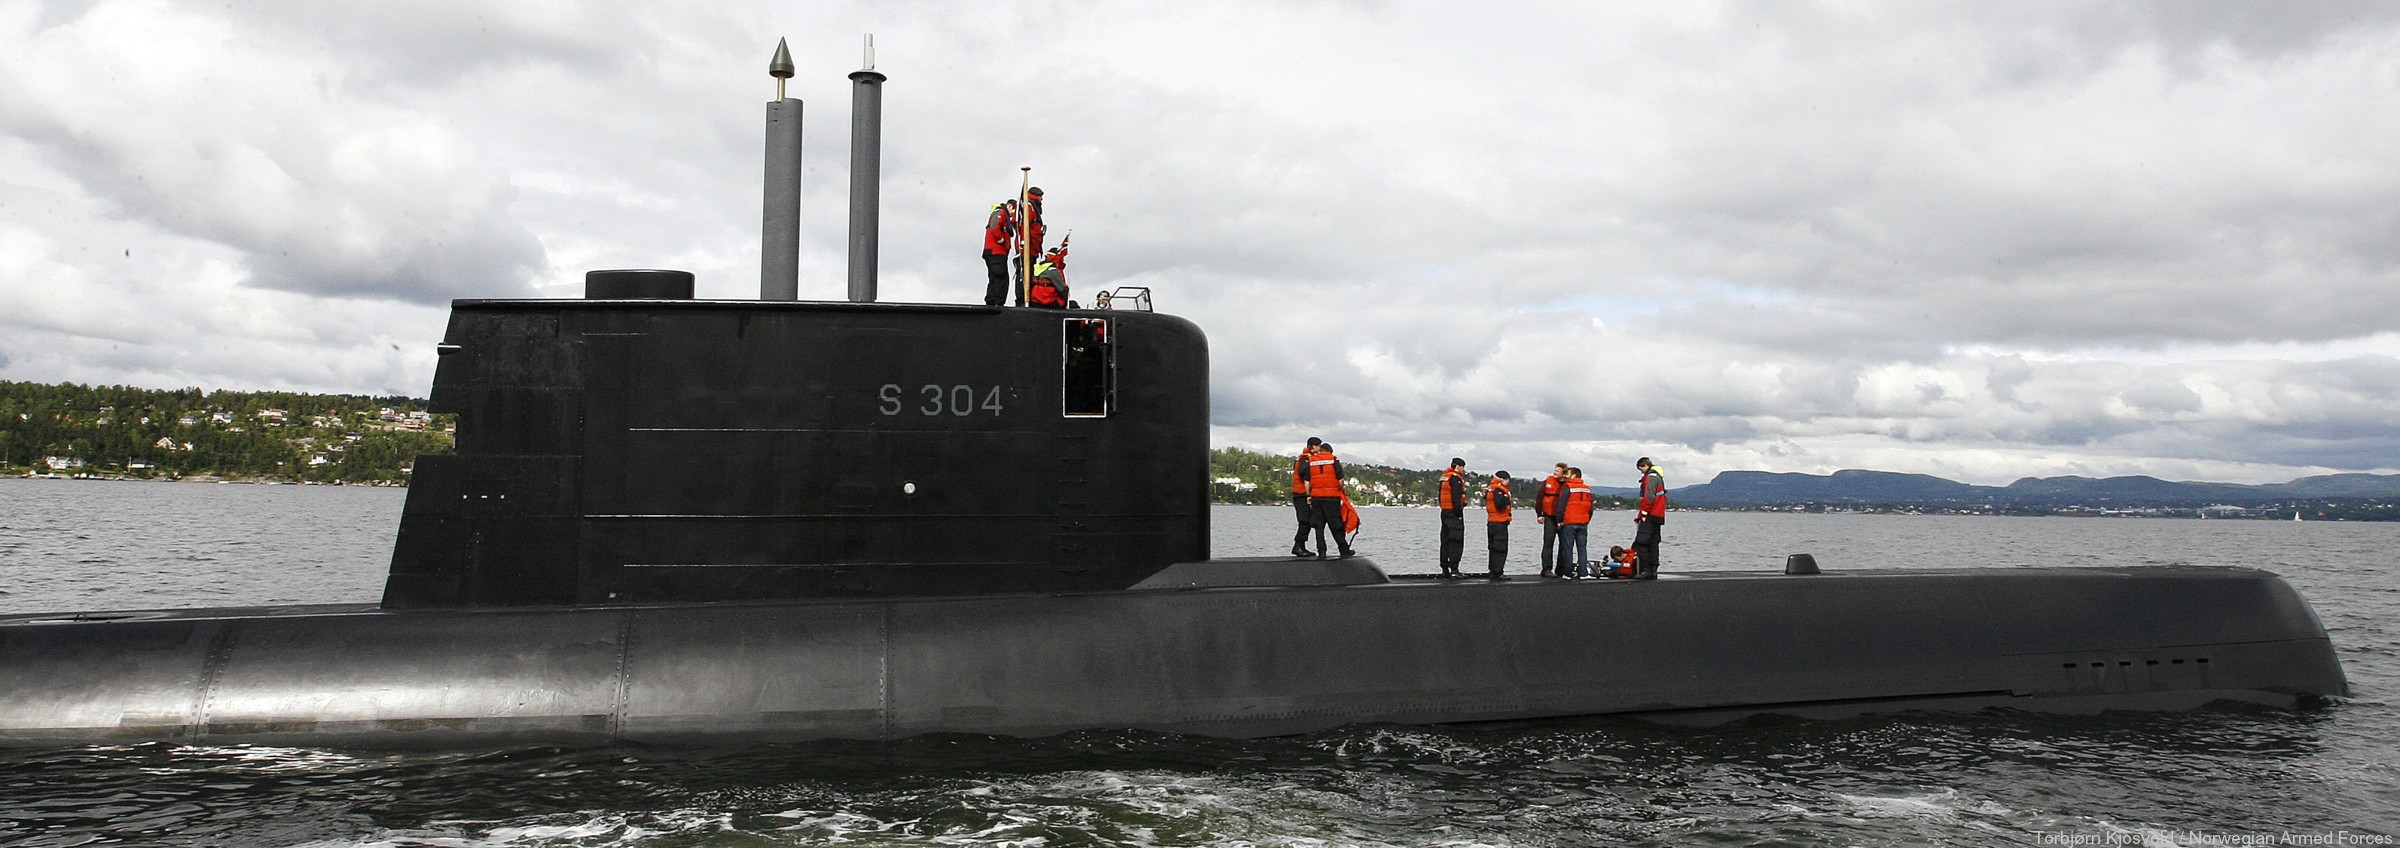 s-304 hnoms knm uthaug ula class submarine type 210 attack ssk undervannsbåt royal norwegian navy sjøforsvaret 08